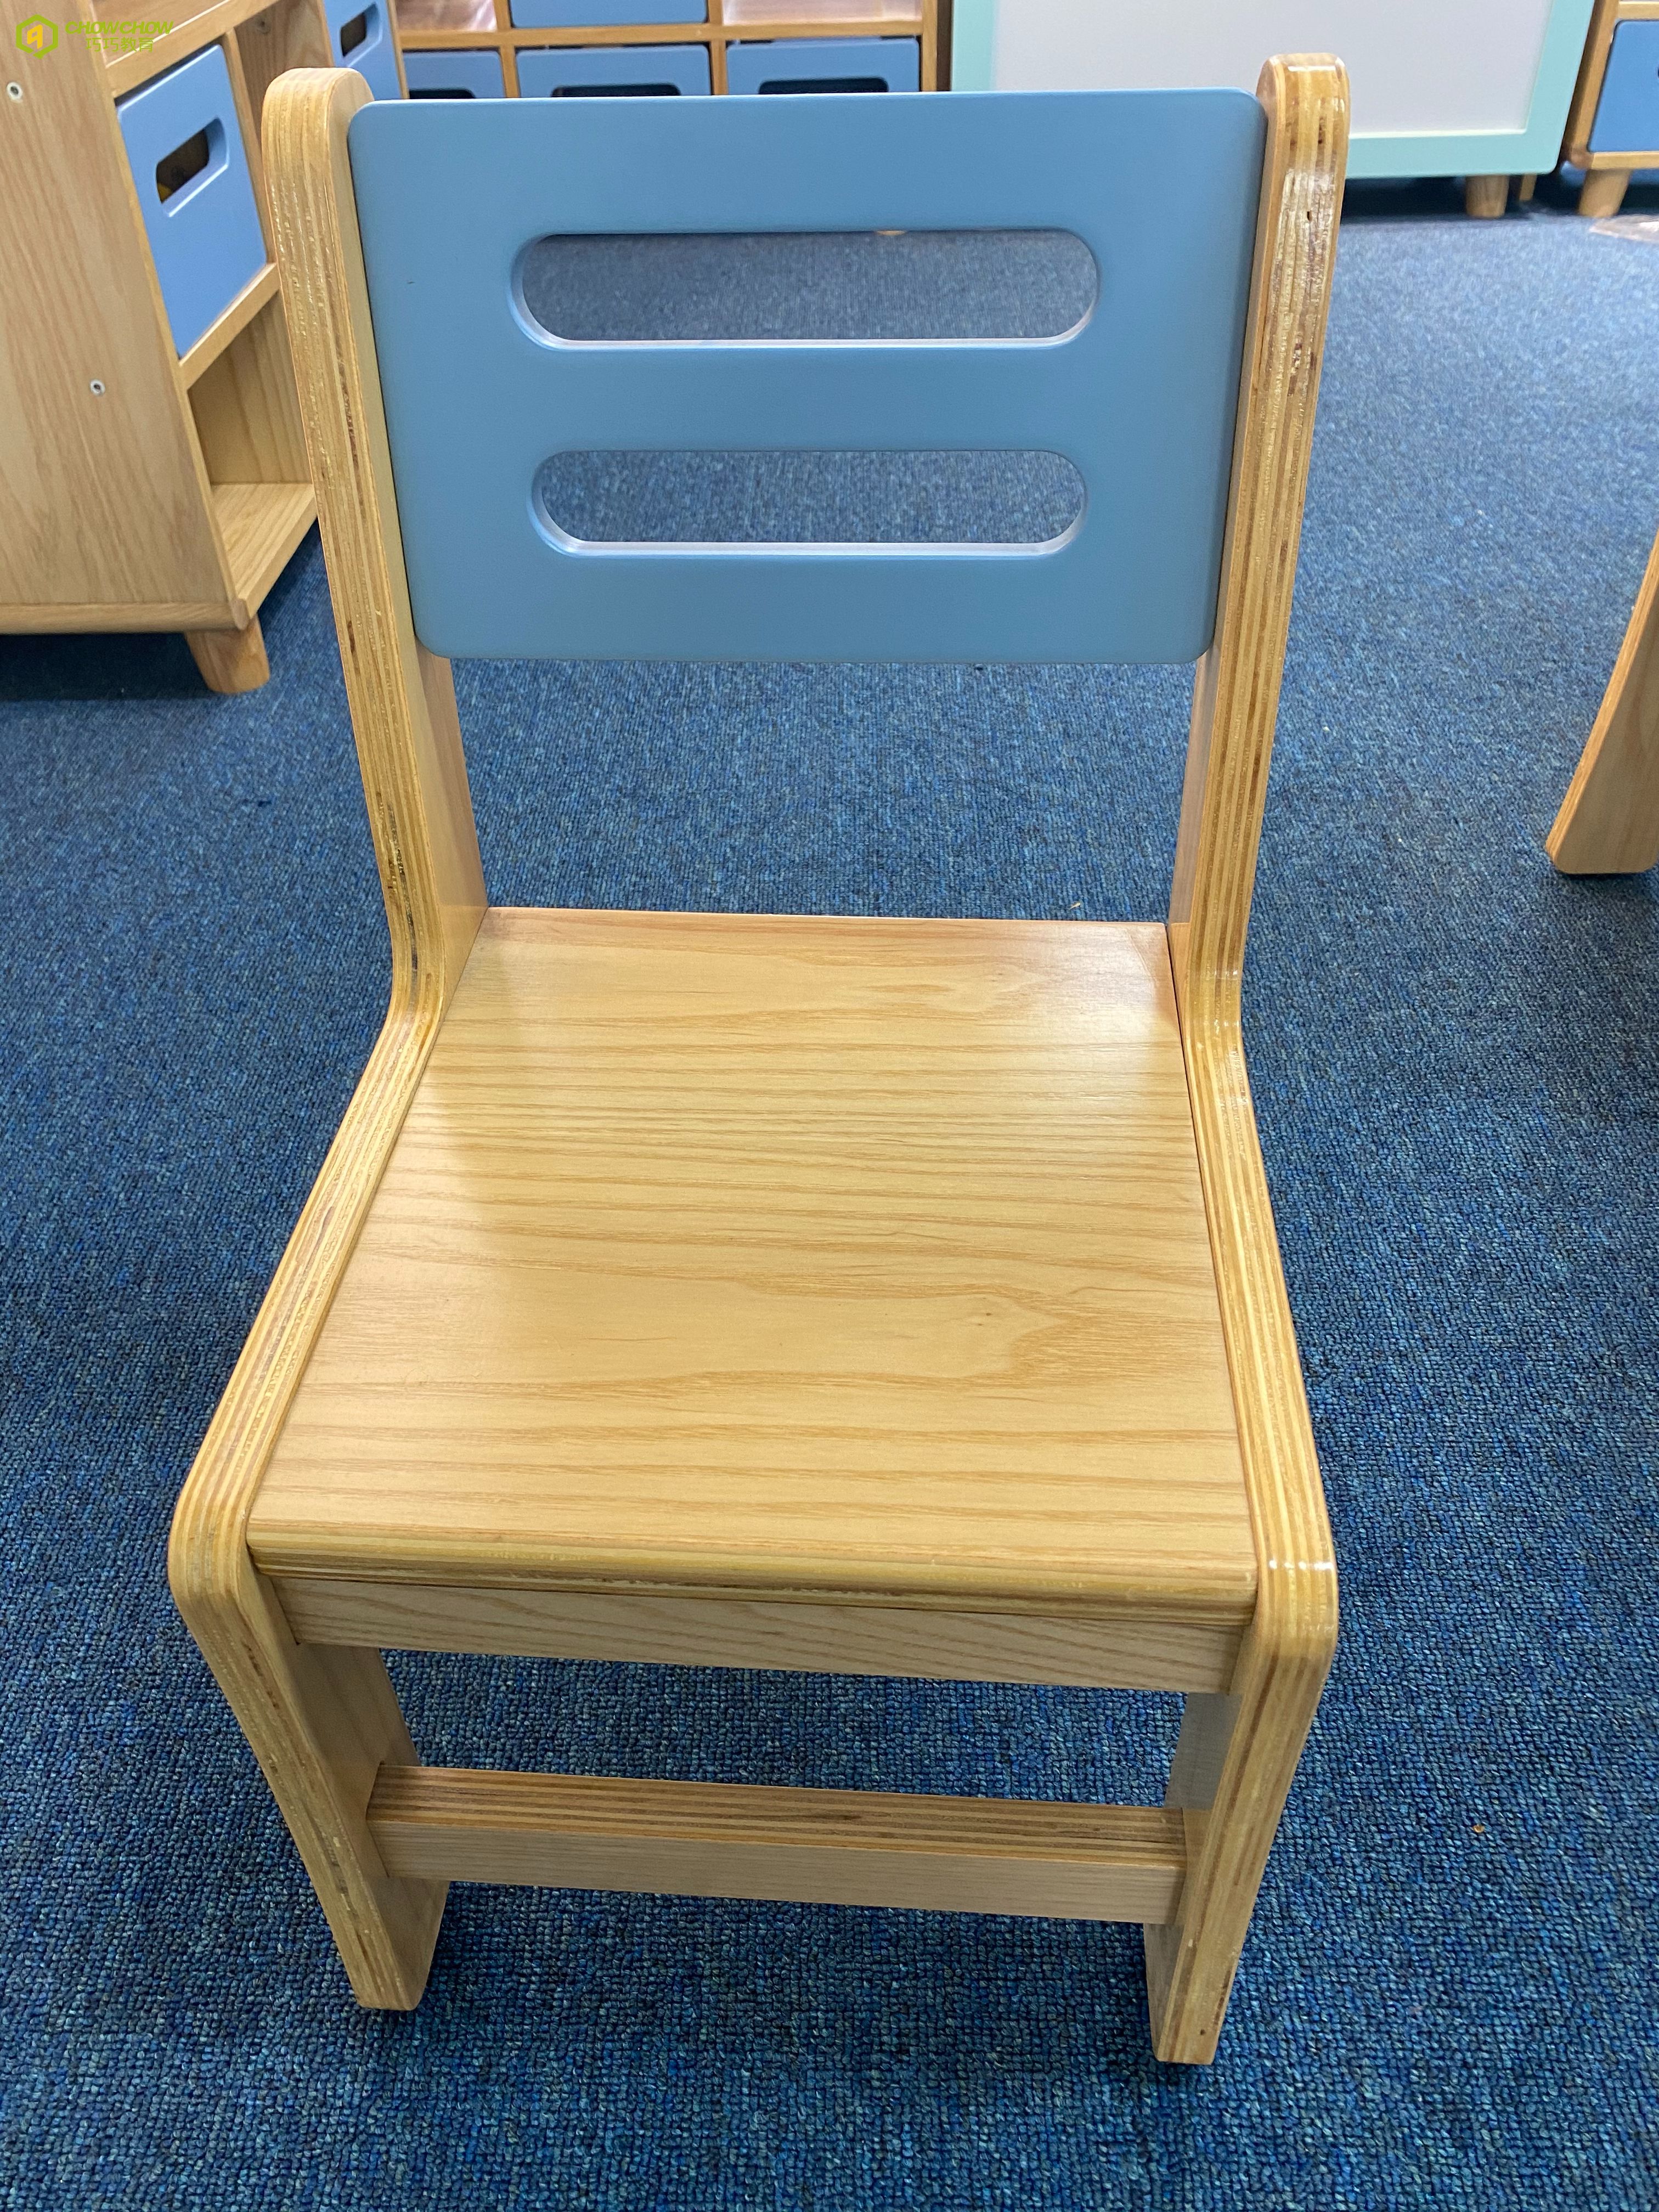 Wooden Kindergarten Daycare Furniture Chairs for Kids